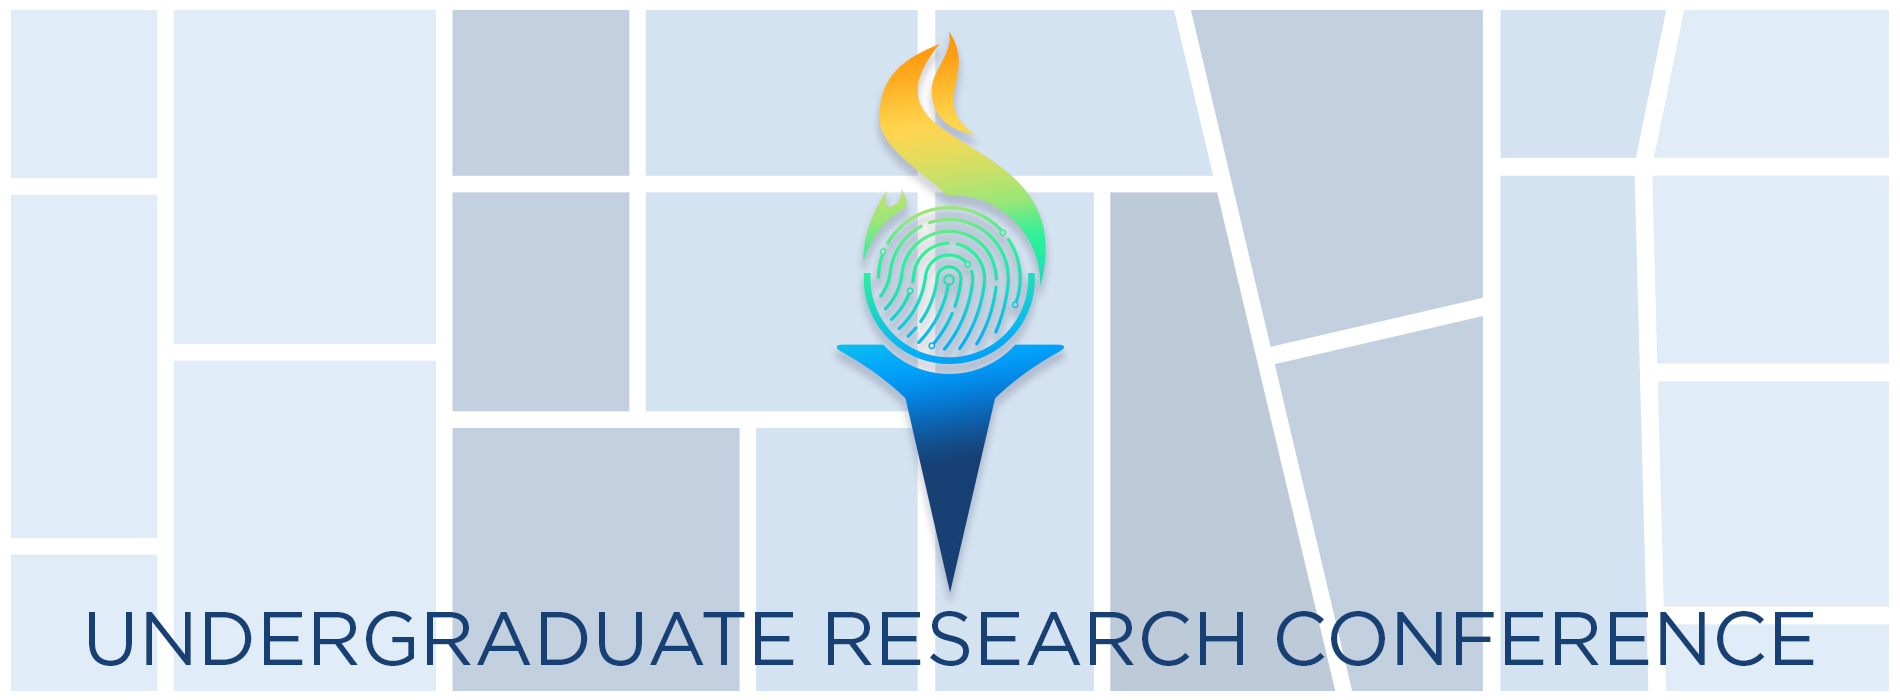 2021 Undergraduate Research Conference